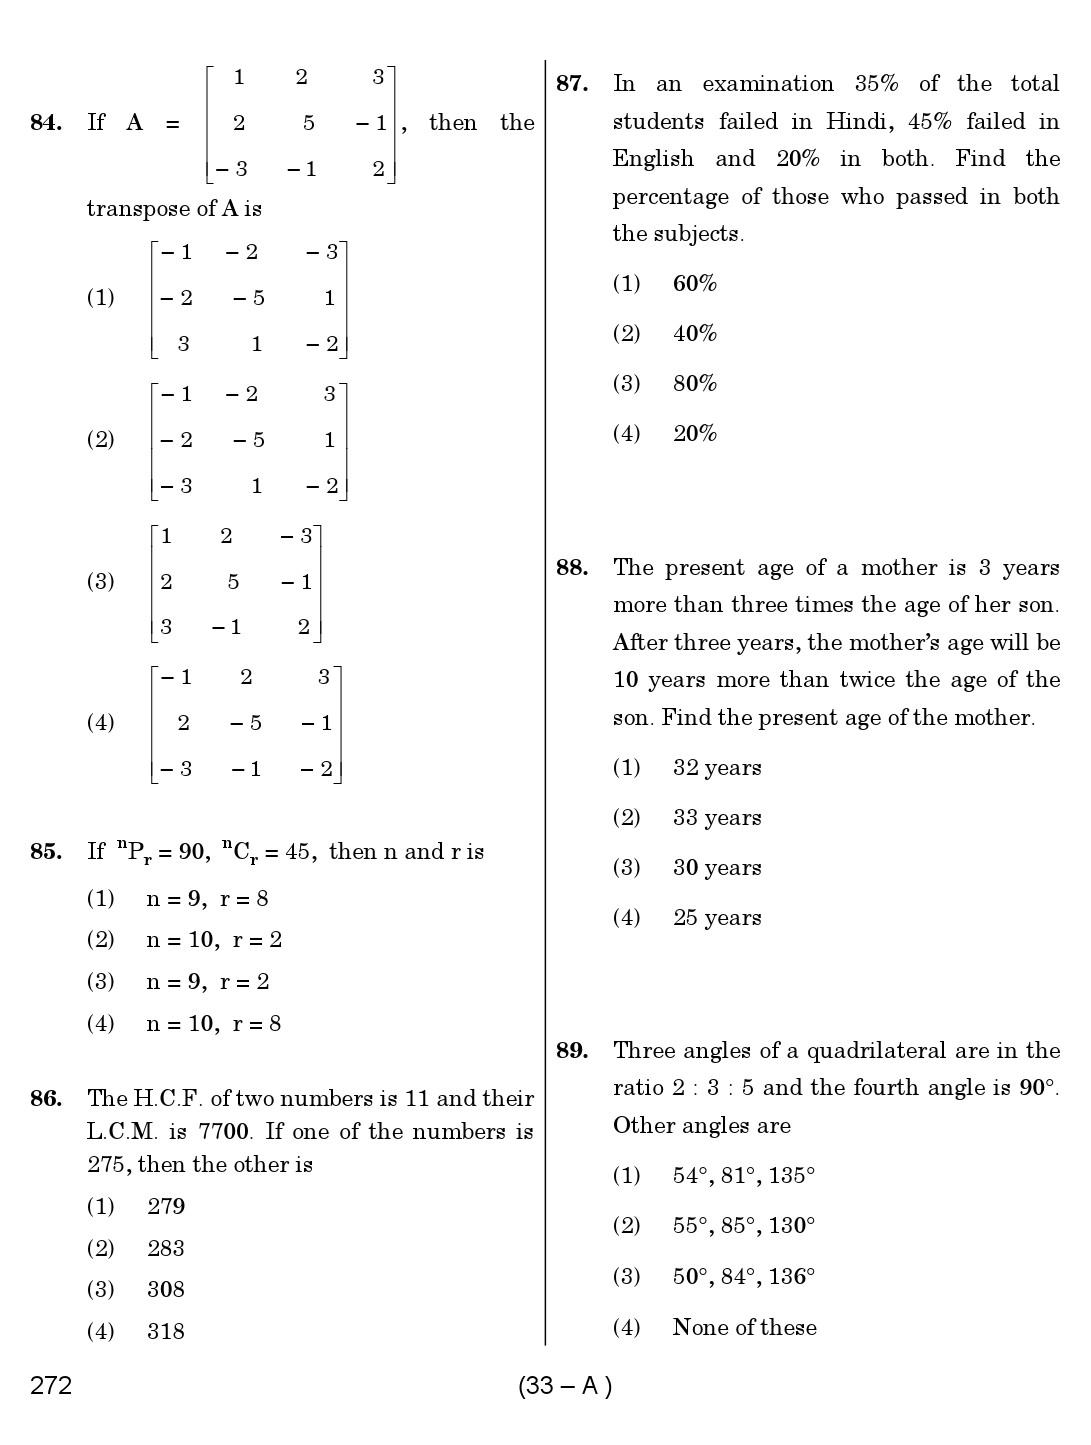 Karnataka PSC Mathematics Teacher Exam Sample Question Paper Subject code 272 33